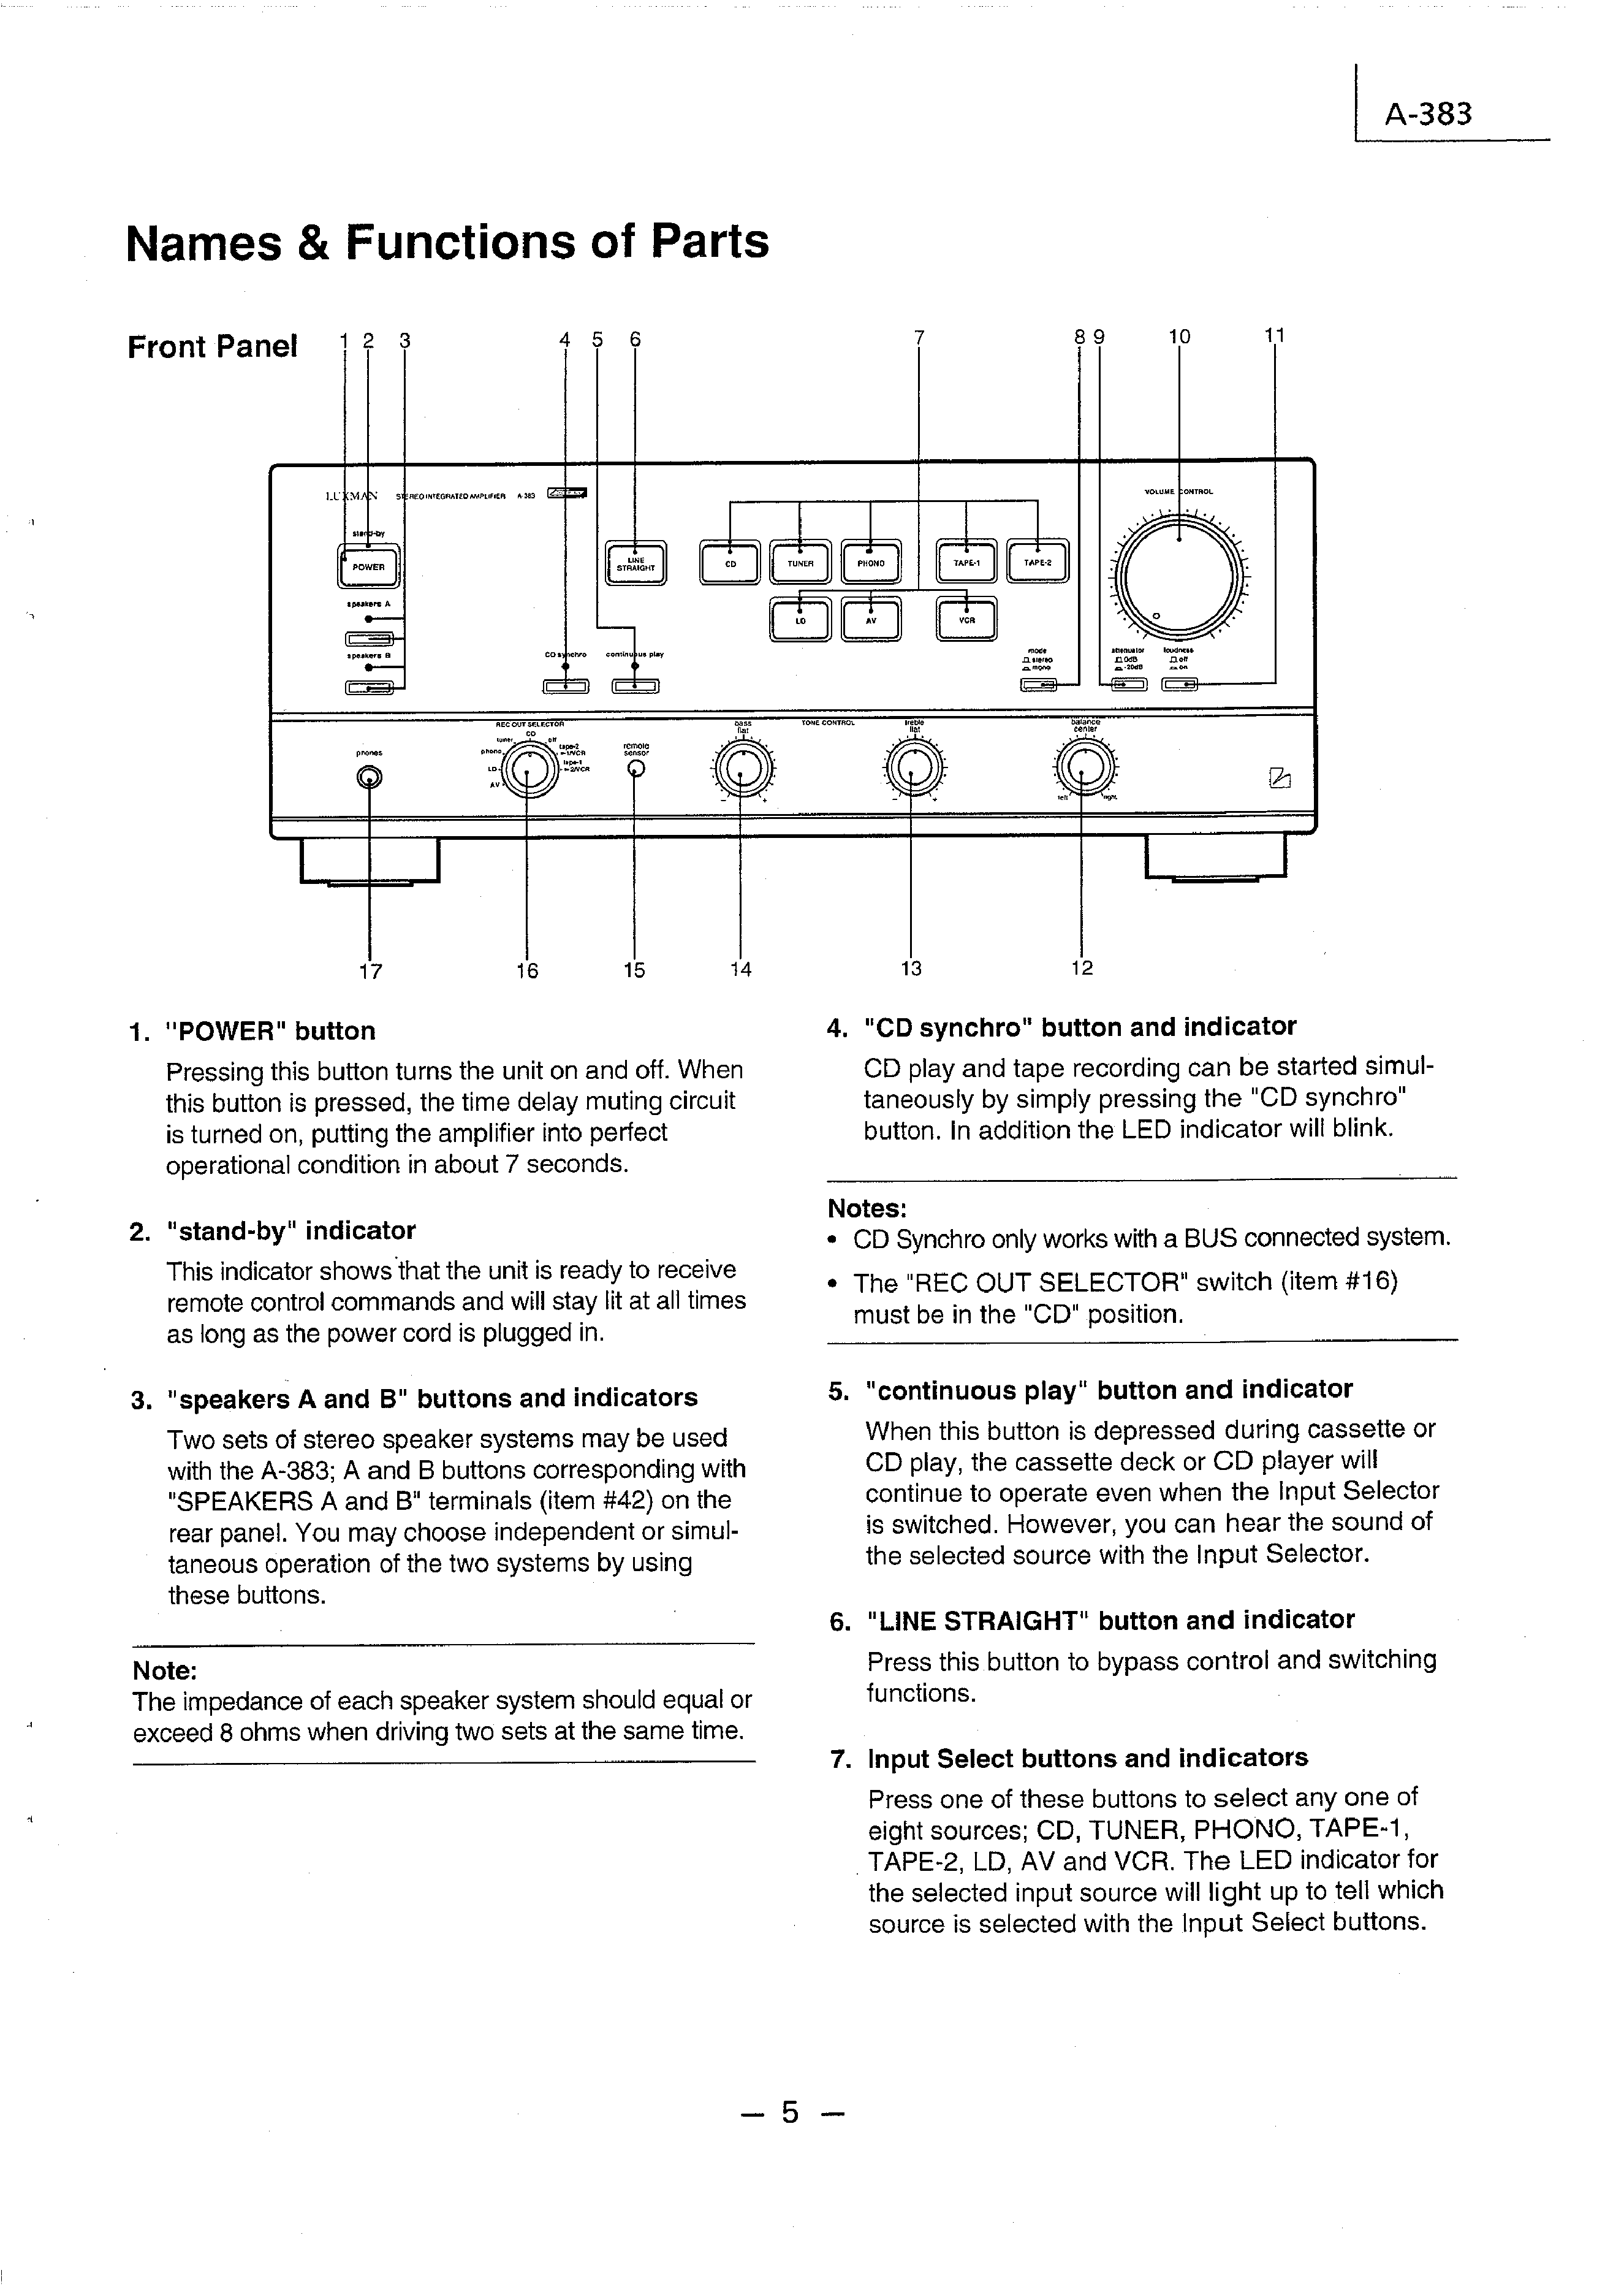 Service Manual-Anleitung für Luxman A-383 